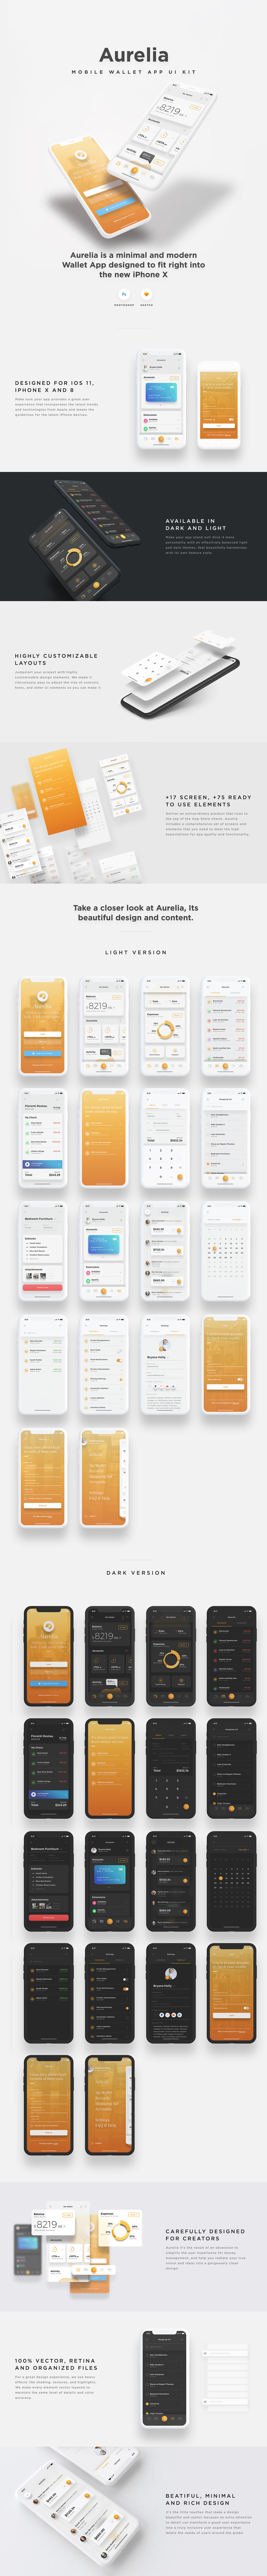 UI/UX ui design user interface Mobile app user experience UX design graphic design  app design mobile